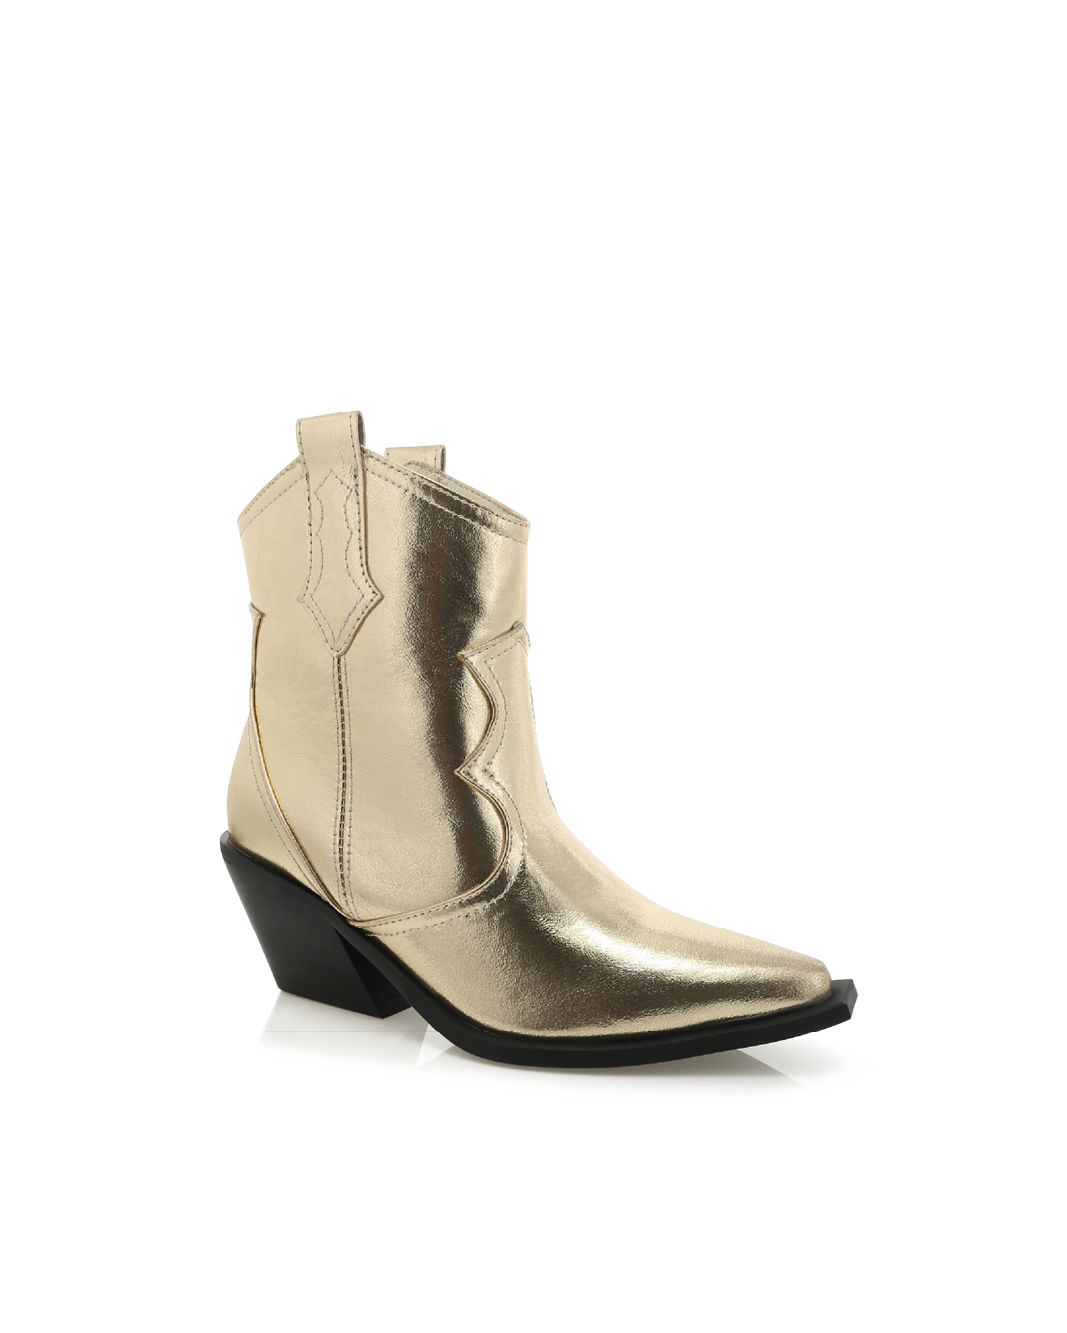 ULIRA - GOLD METALLIC-Boots-Billini-BILLINI USA